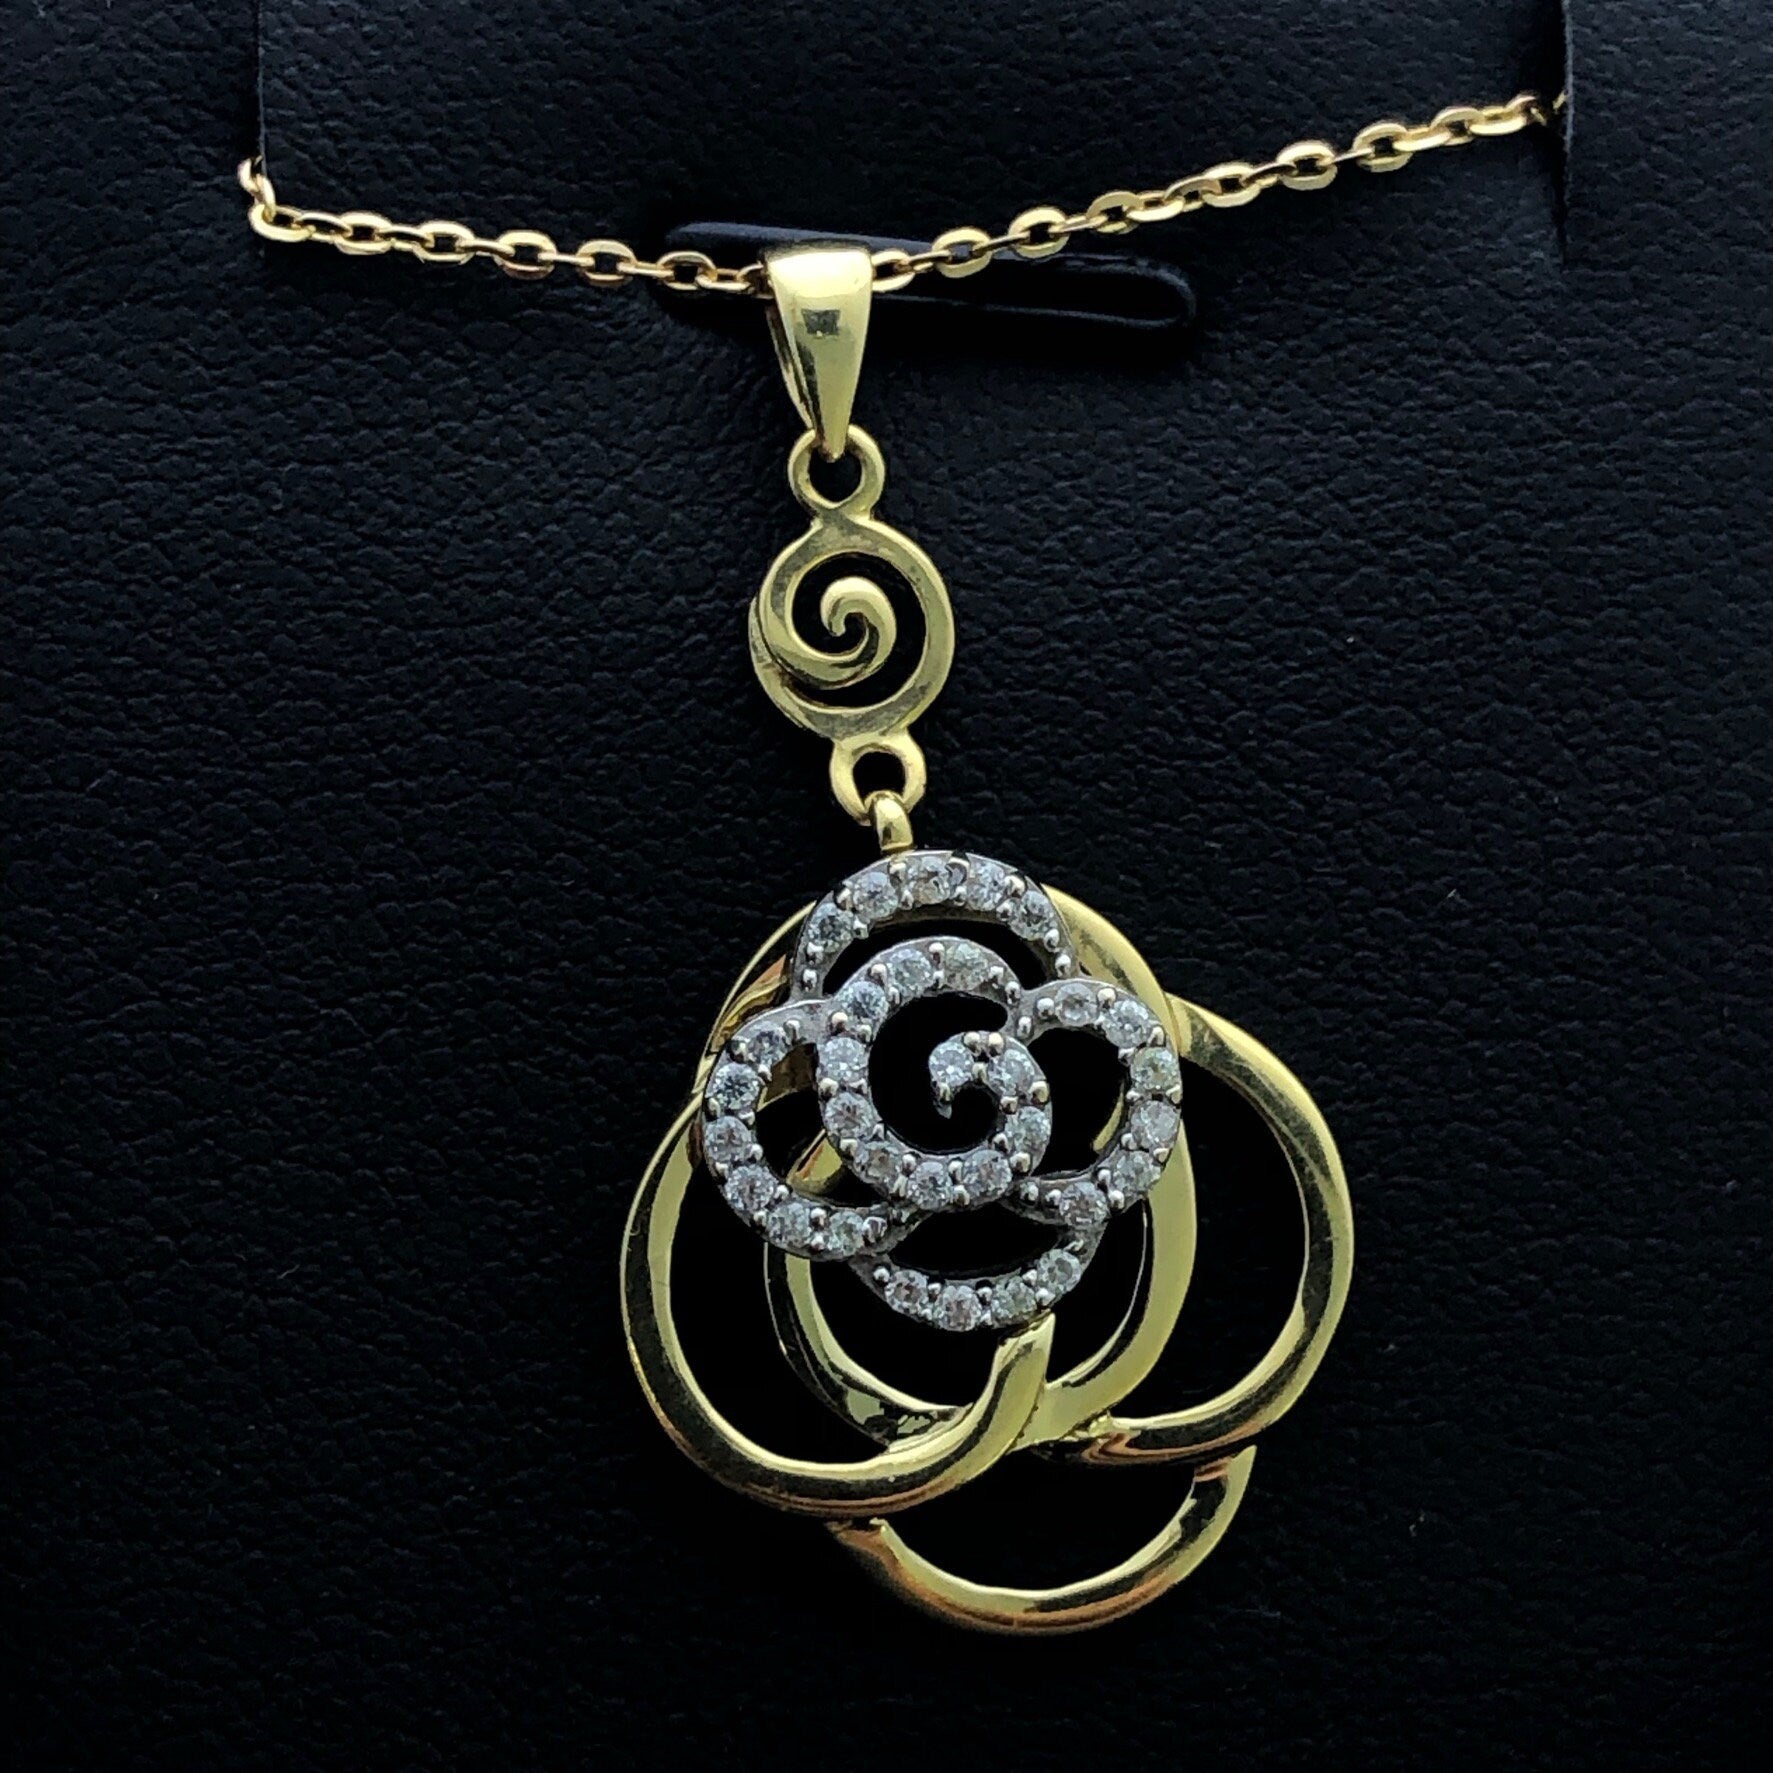 LIV 14k Yellow Gold & Diamonds Flower Double Halo Long Design Pendant Necklace Gift